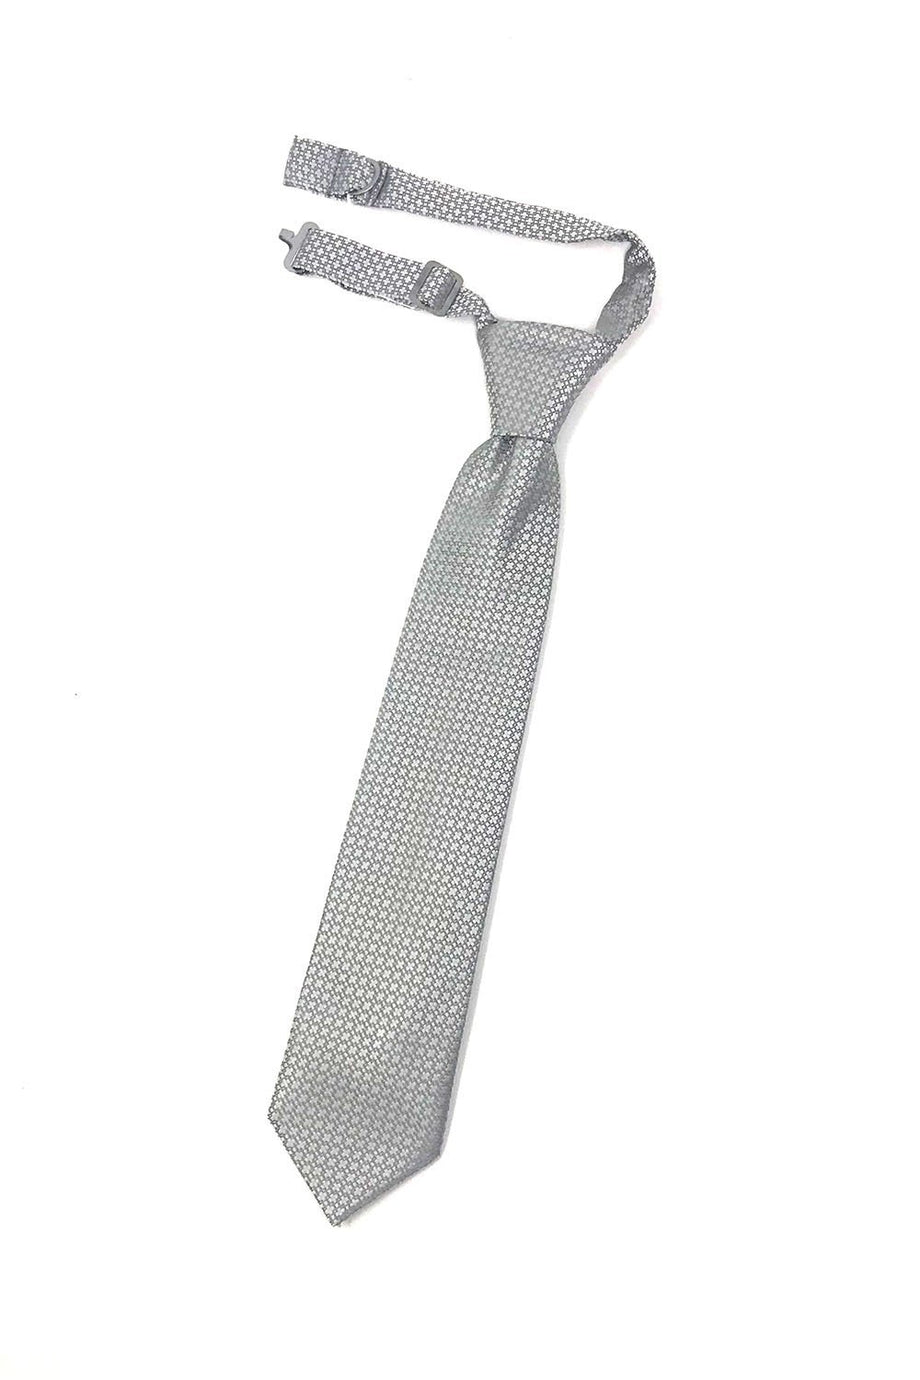 Cardi Grey Regal Kids Necktie